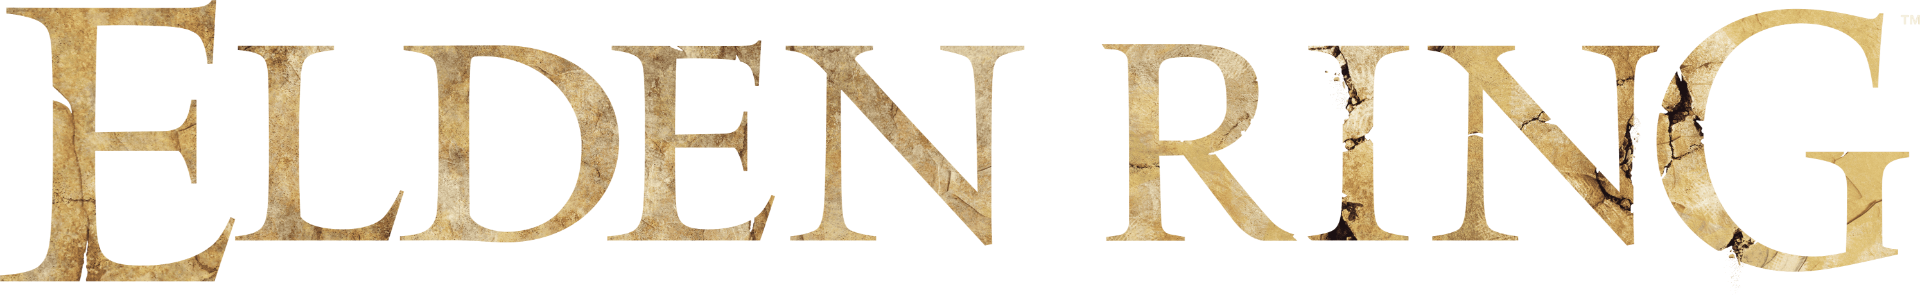 Elden Ring - Logo - Dark.png (1920×295)